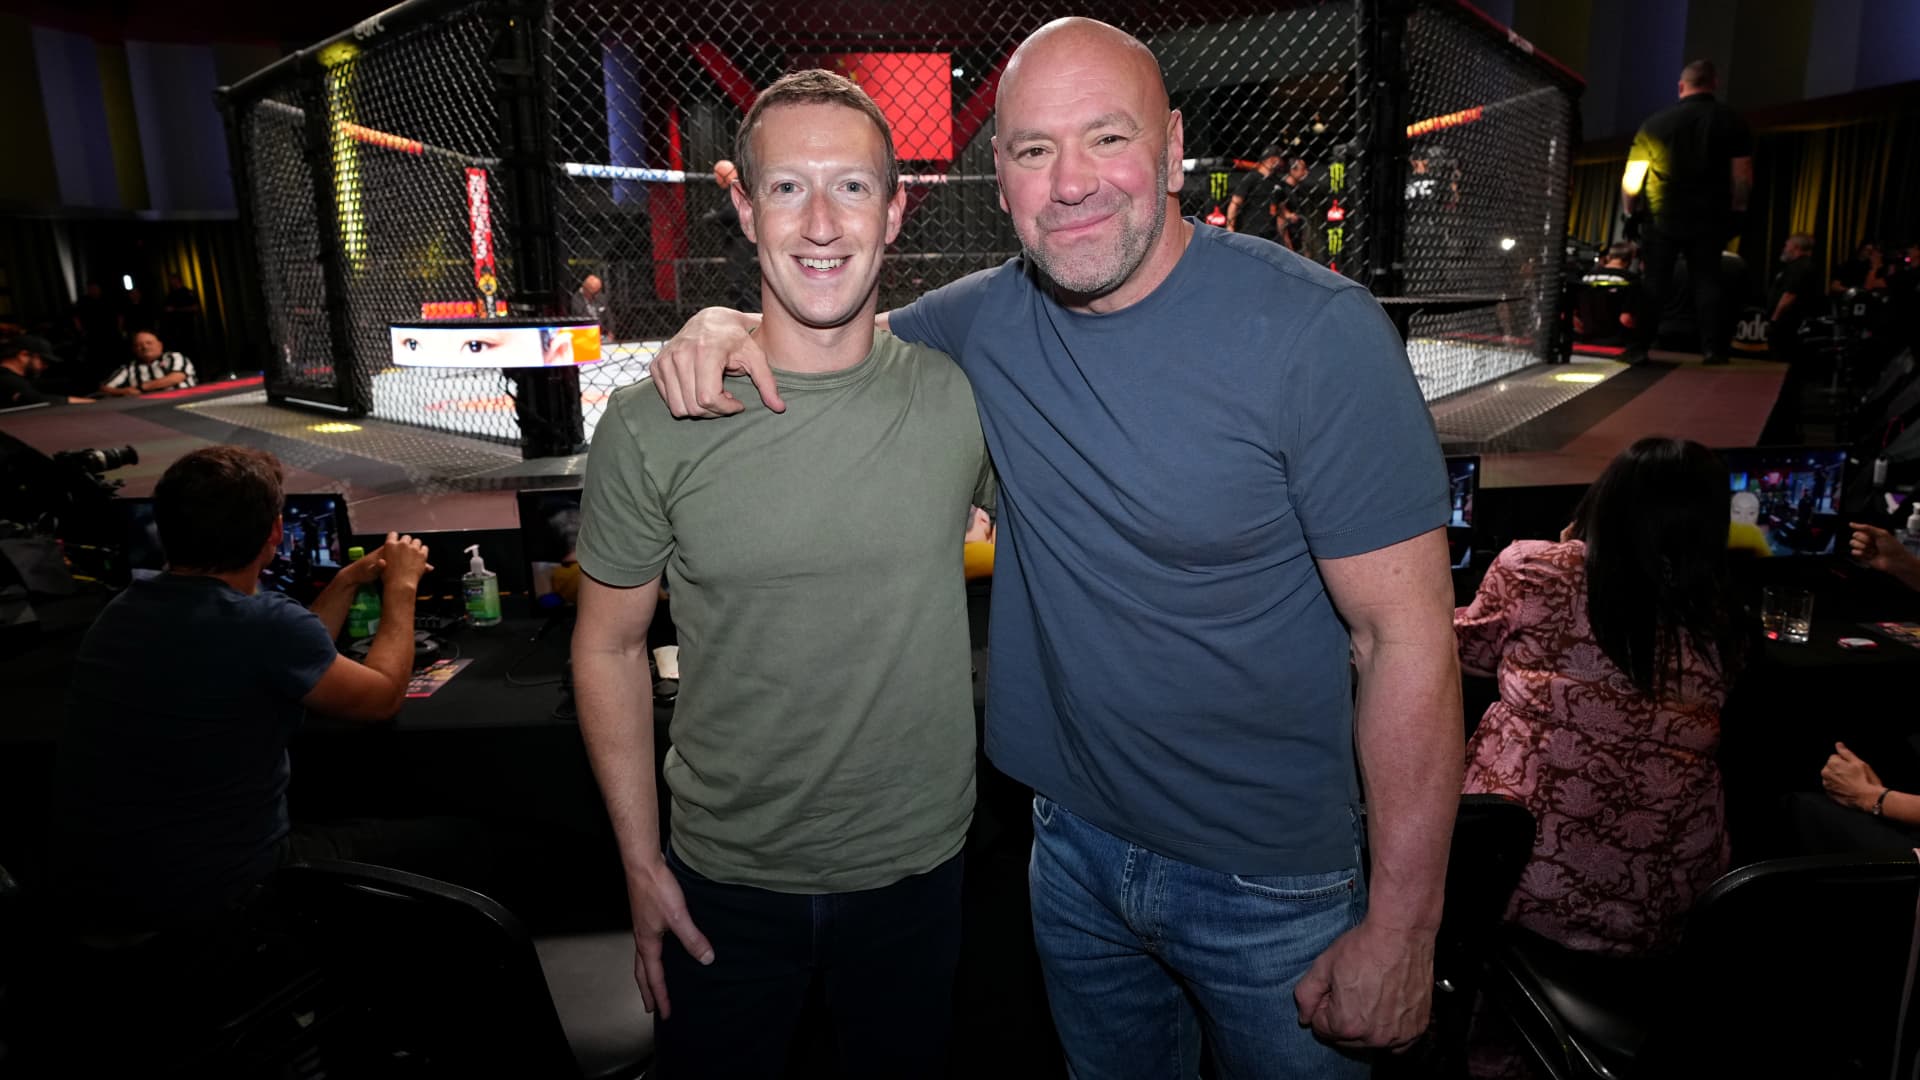 Meta CEO Mark Zuckerberg tore his ACL while practicing for a aggressive MMA fight